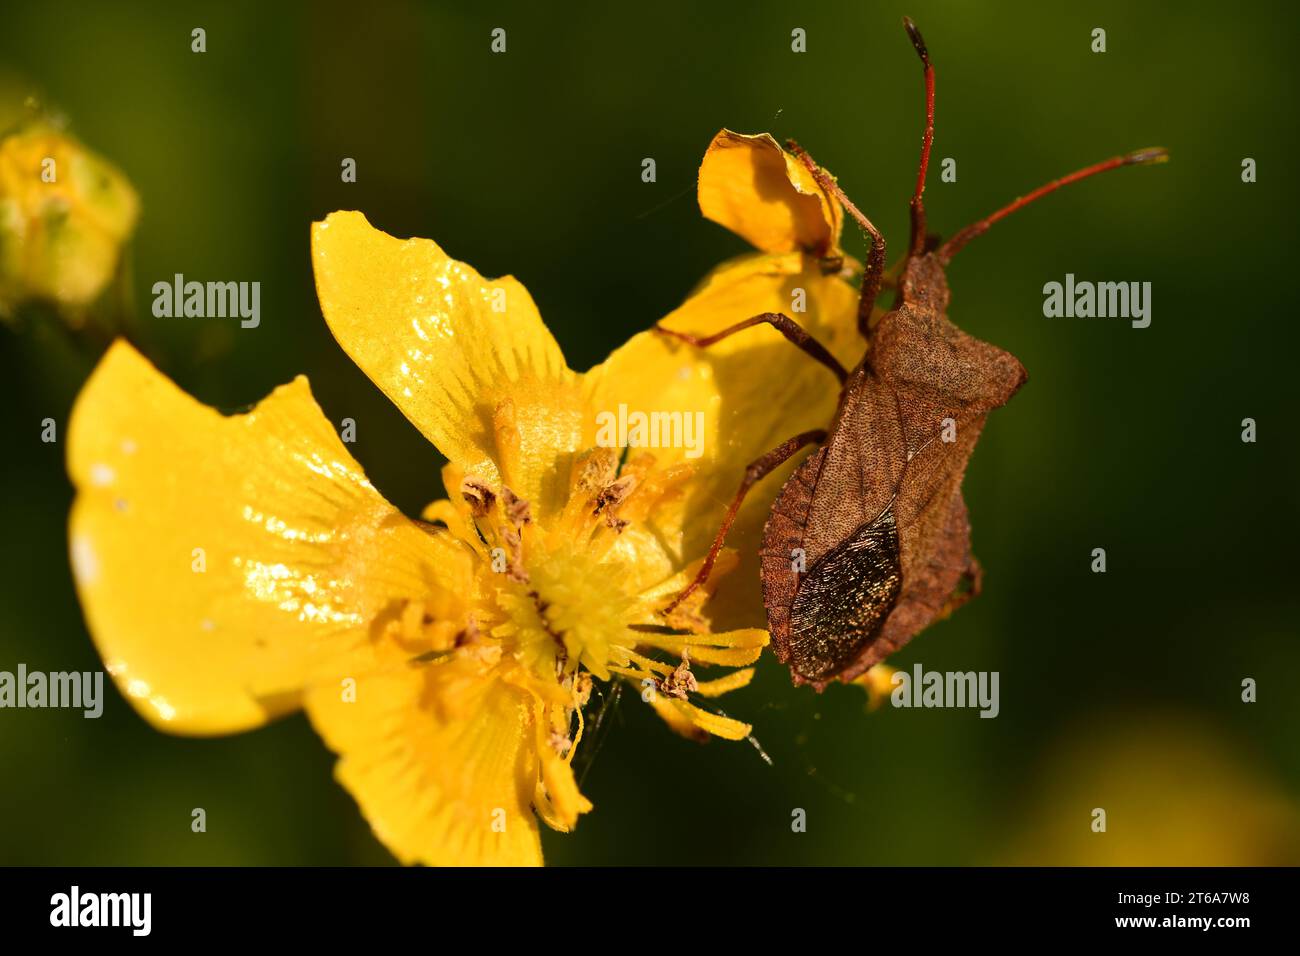 Coreidae, Leaf-footed bug, insects, macro photography, Kilkenny, Ireland Stock Photo